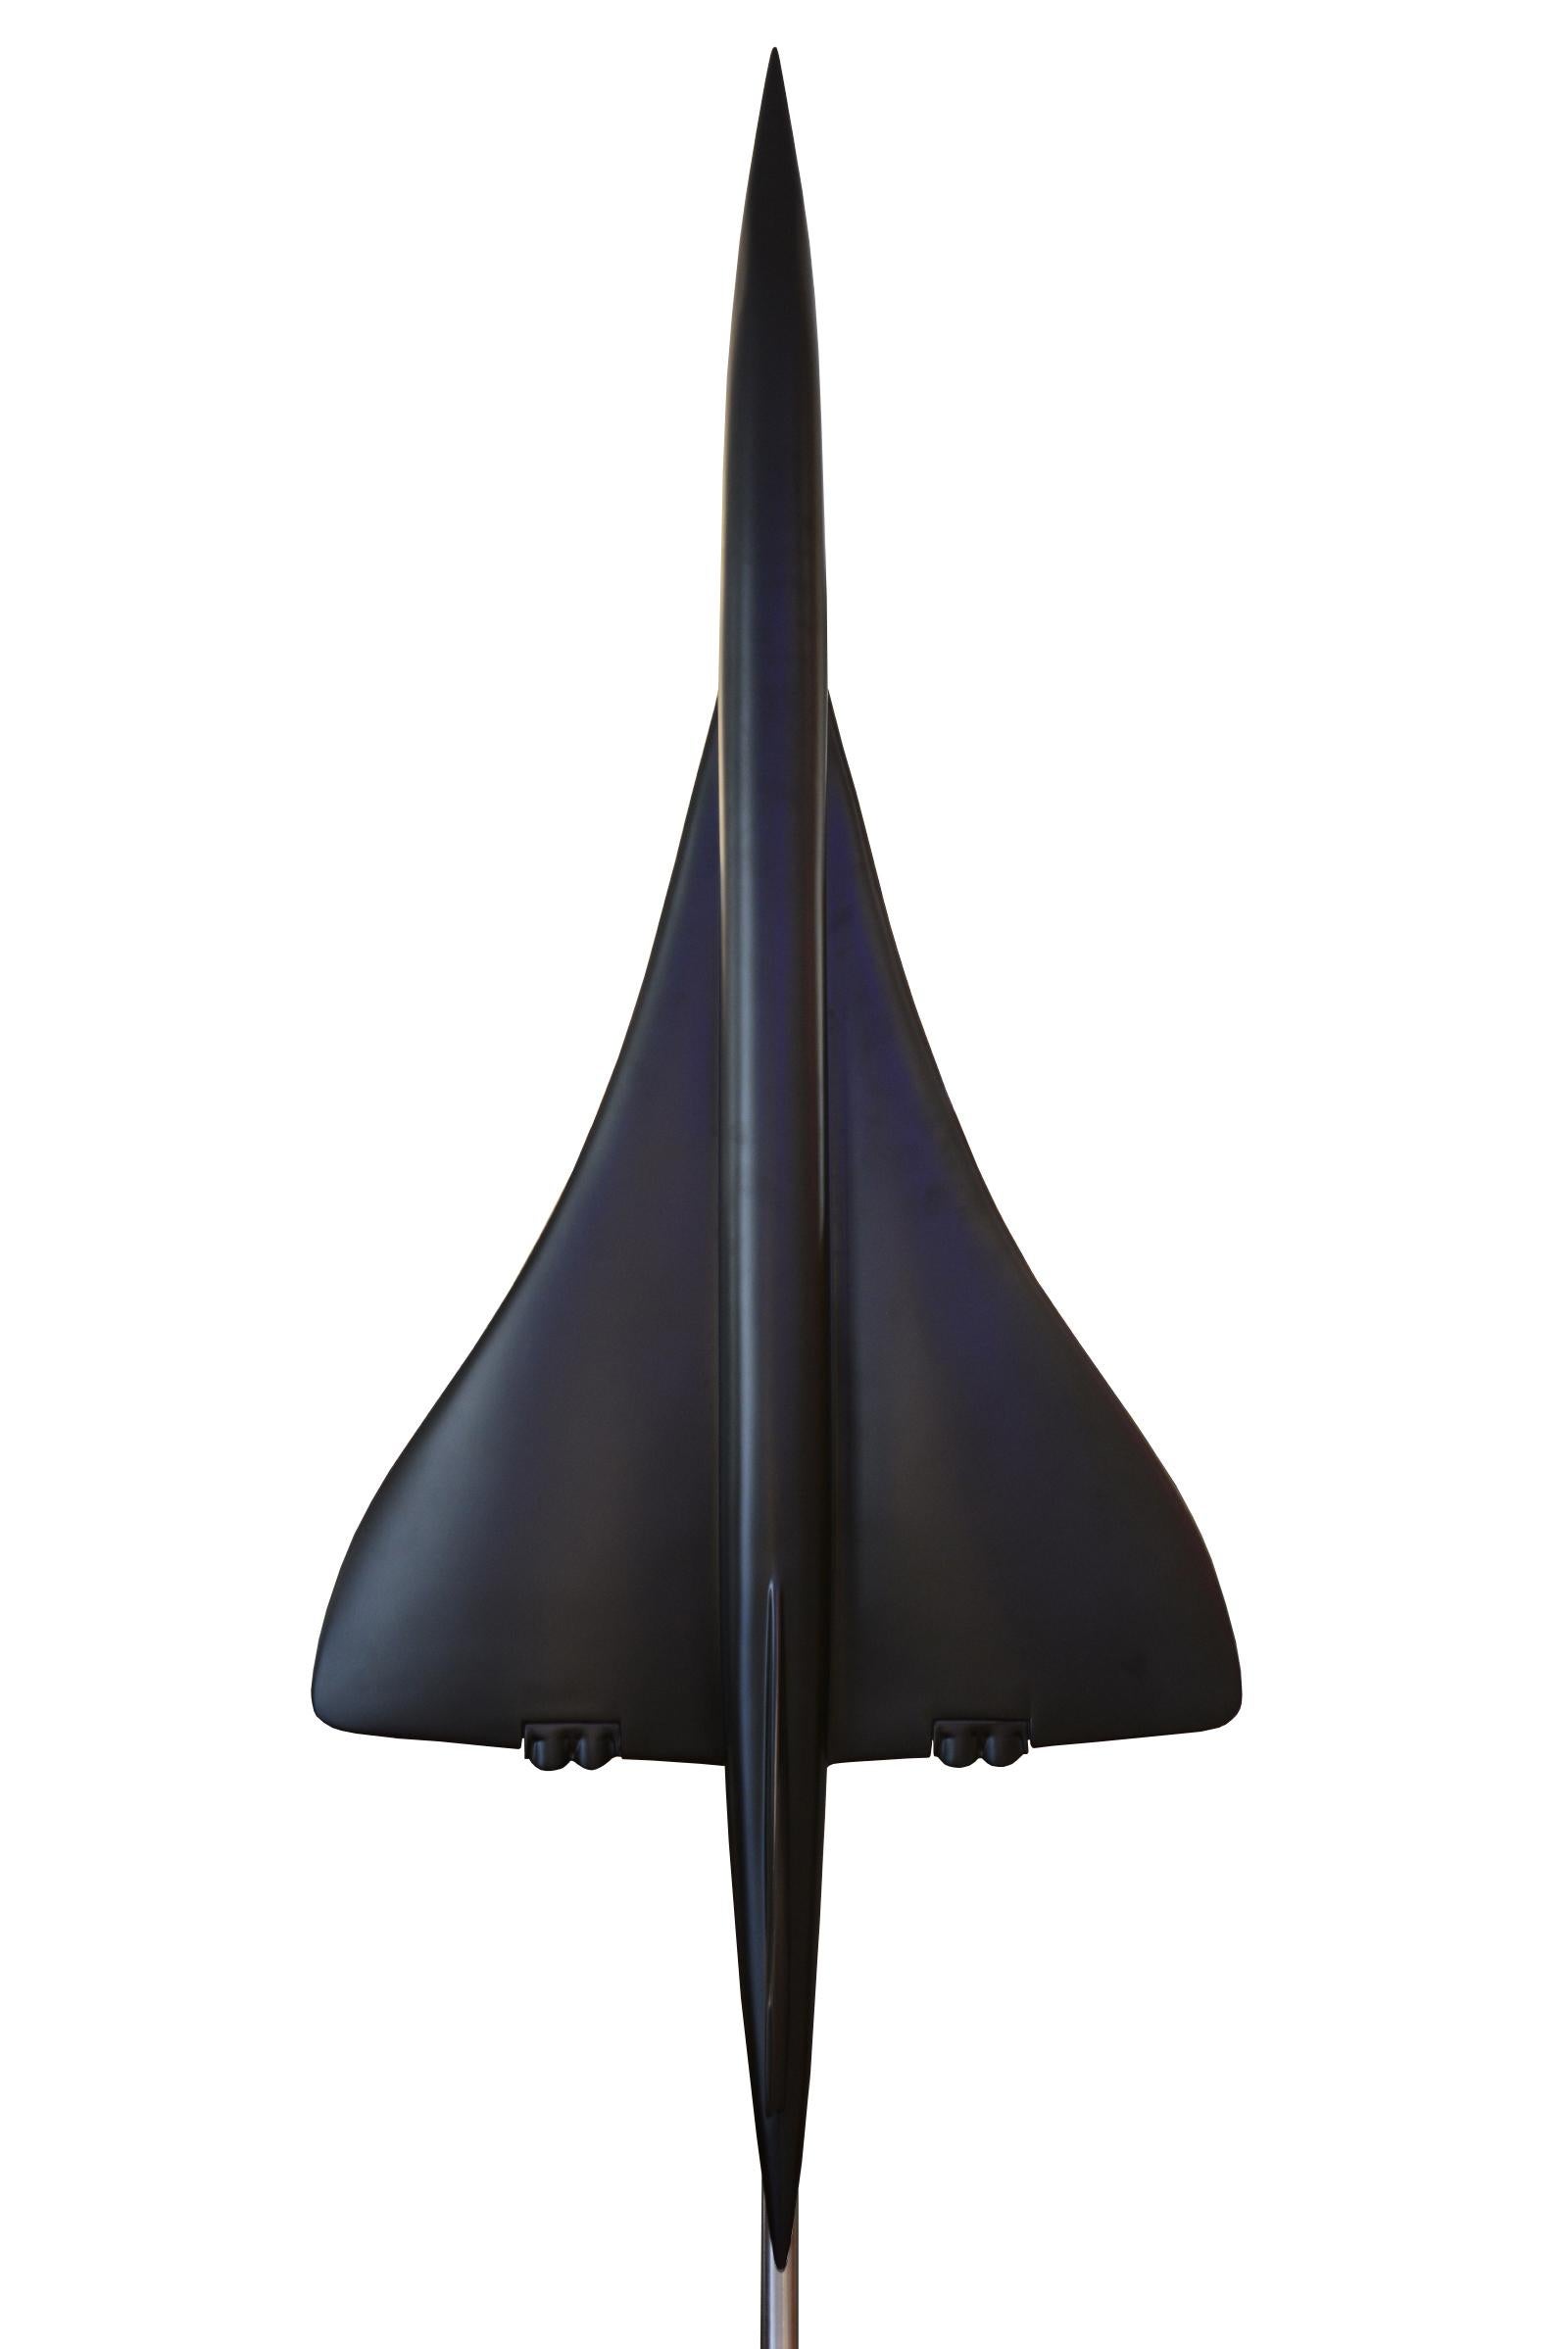 Sculpture Concorde model black in fiberglass
in black matt finish. Scale 1/36em on polished
brushed aluminium base. Exceptional and unique piece.
